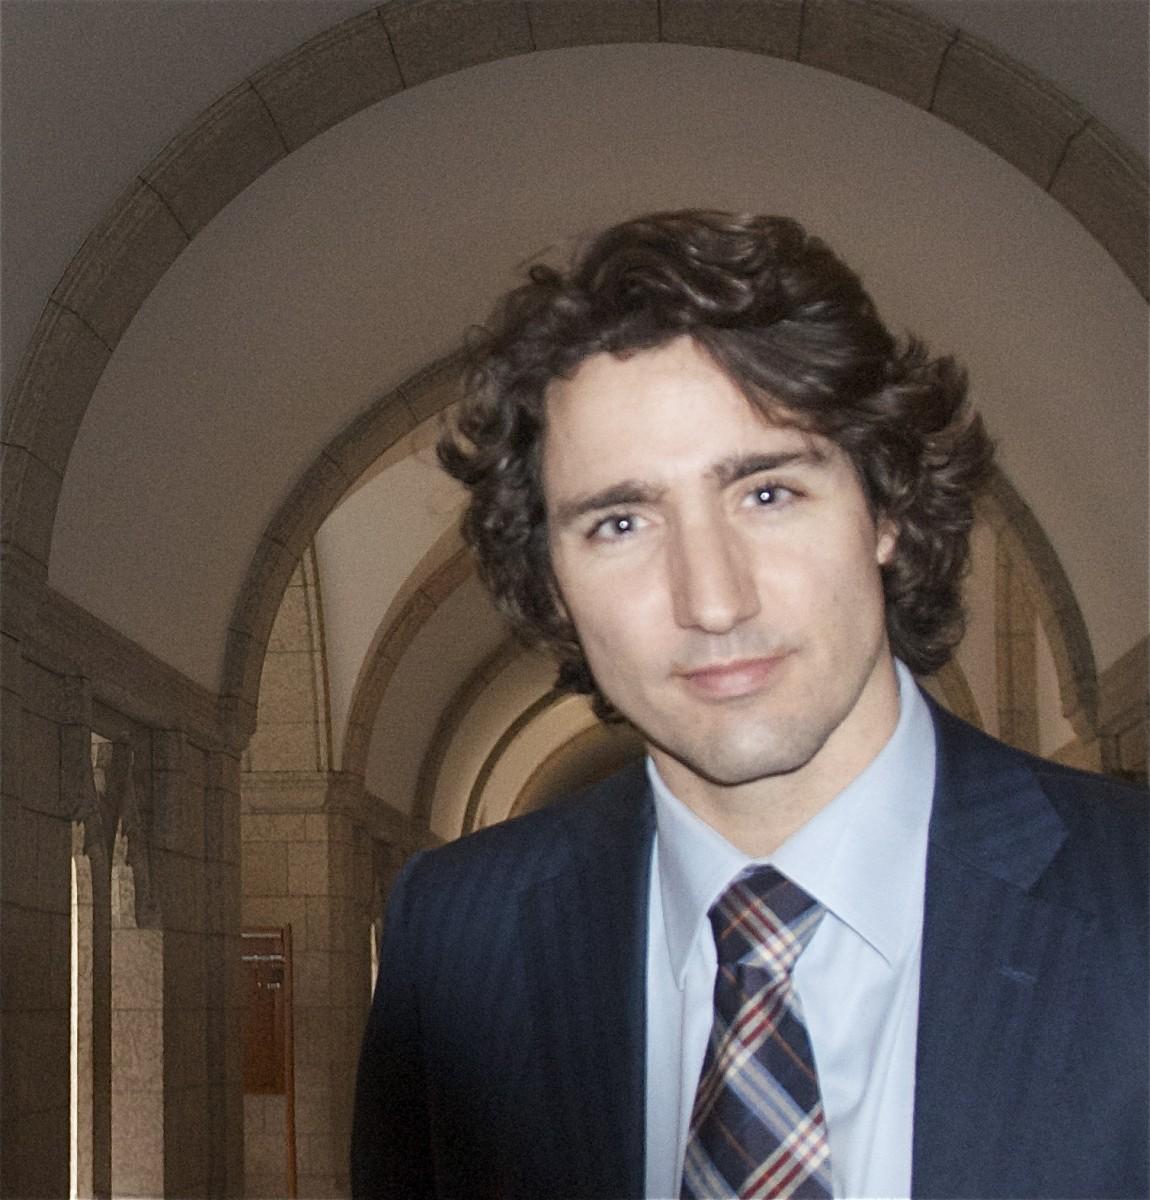 <a><img class="size-medium wp-image-1790530" title="Justin Trudeau" src="https://www.theepochtimes.com/assets/uploads/2015/09/jdDSC_5000.jpg" alt="Justin Trudeau" width="335" height="350"/></a>